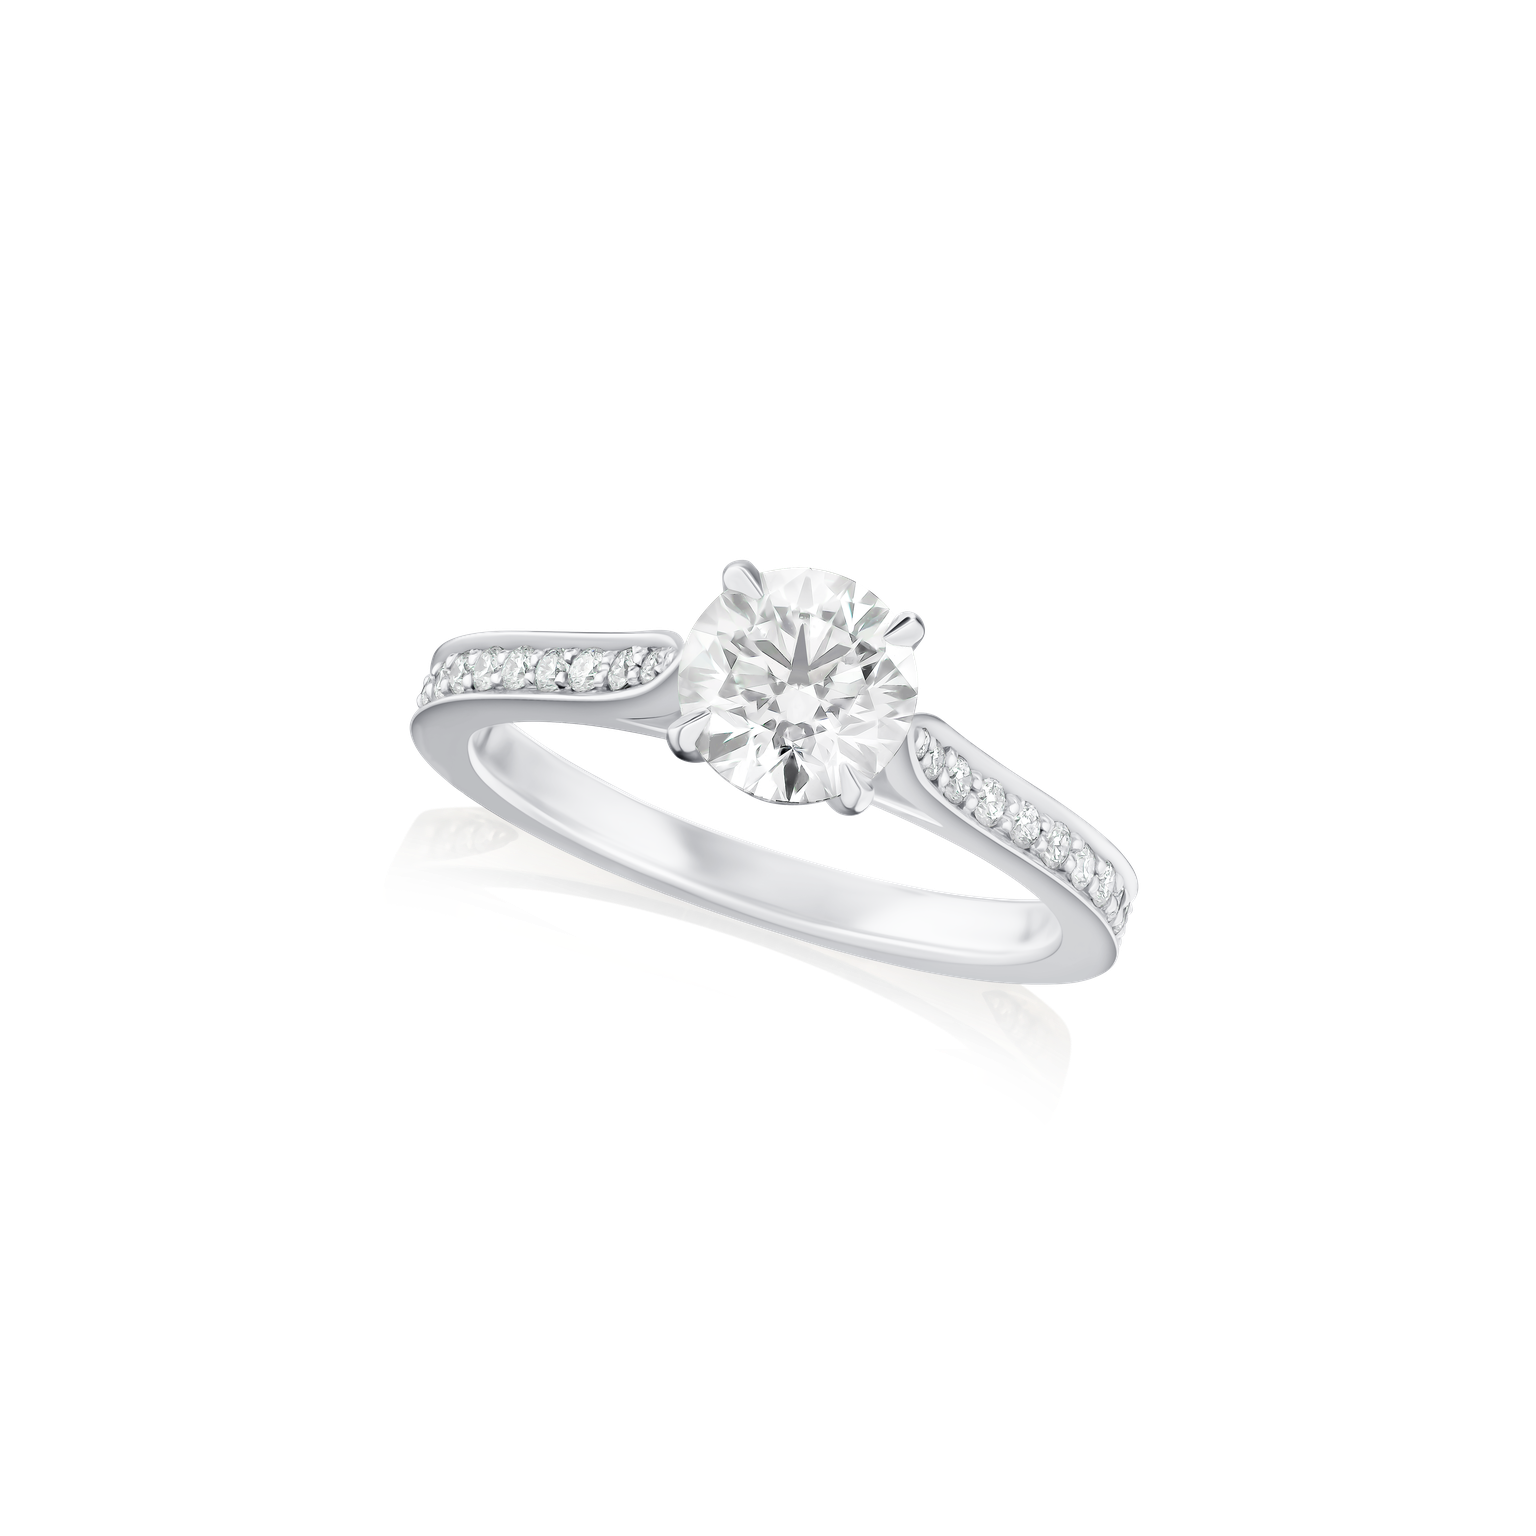 1.01cts Round Brilliant Cut Diamond Solitaire Ring